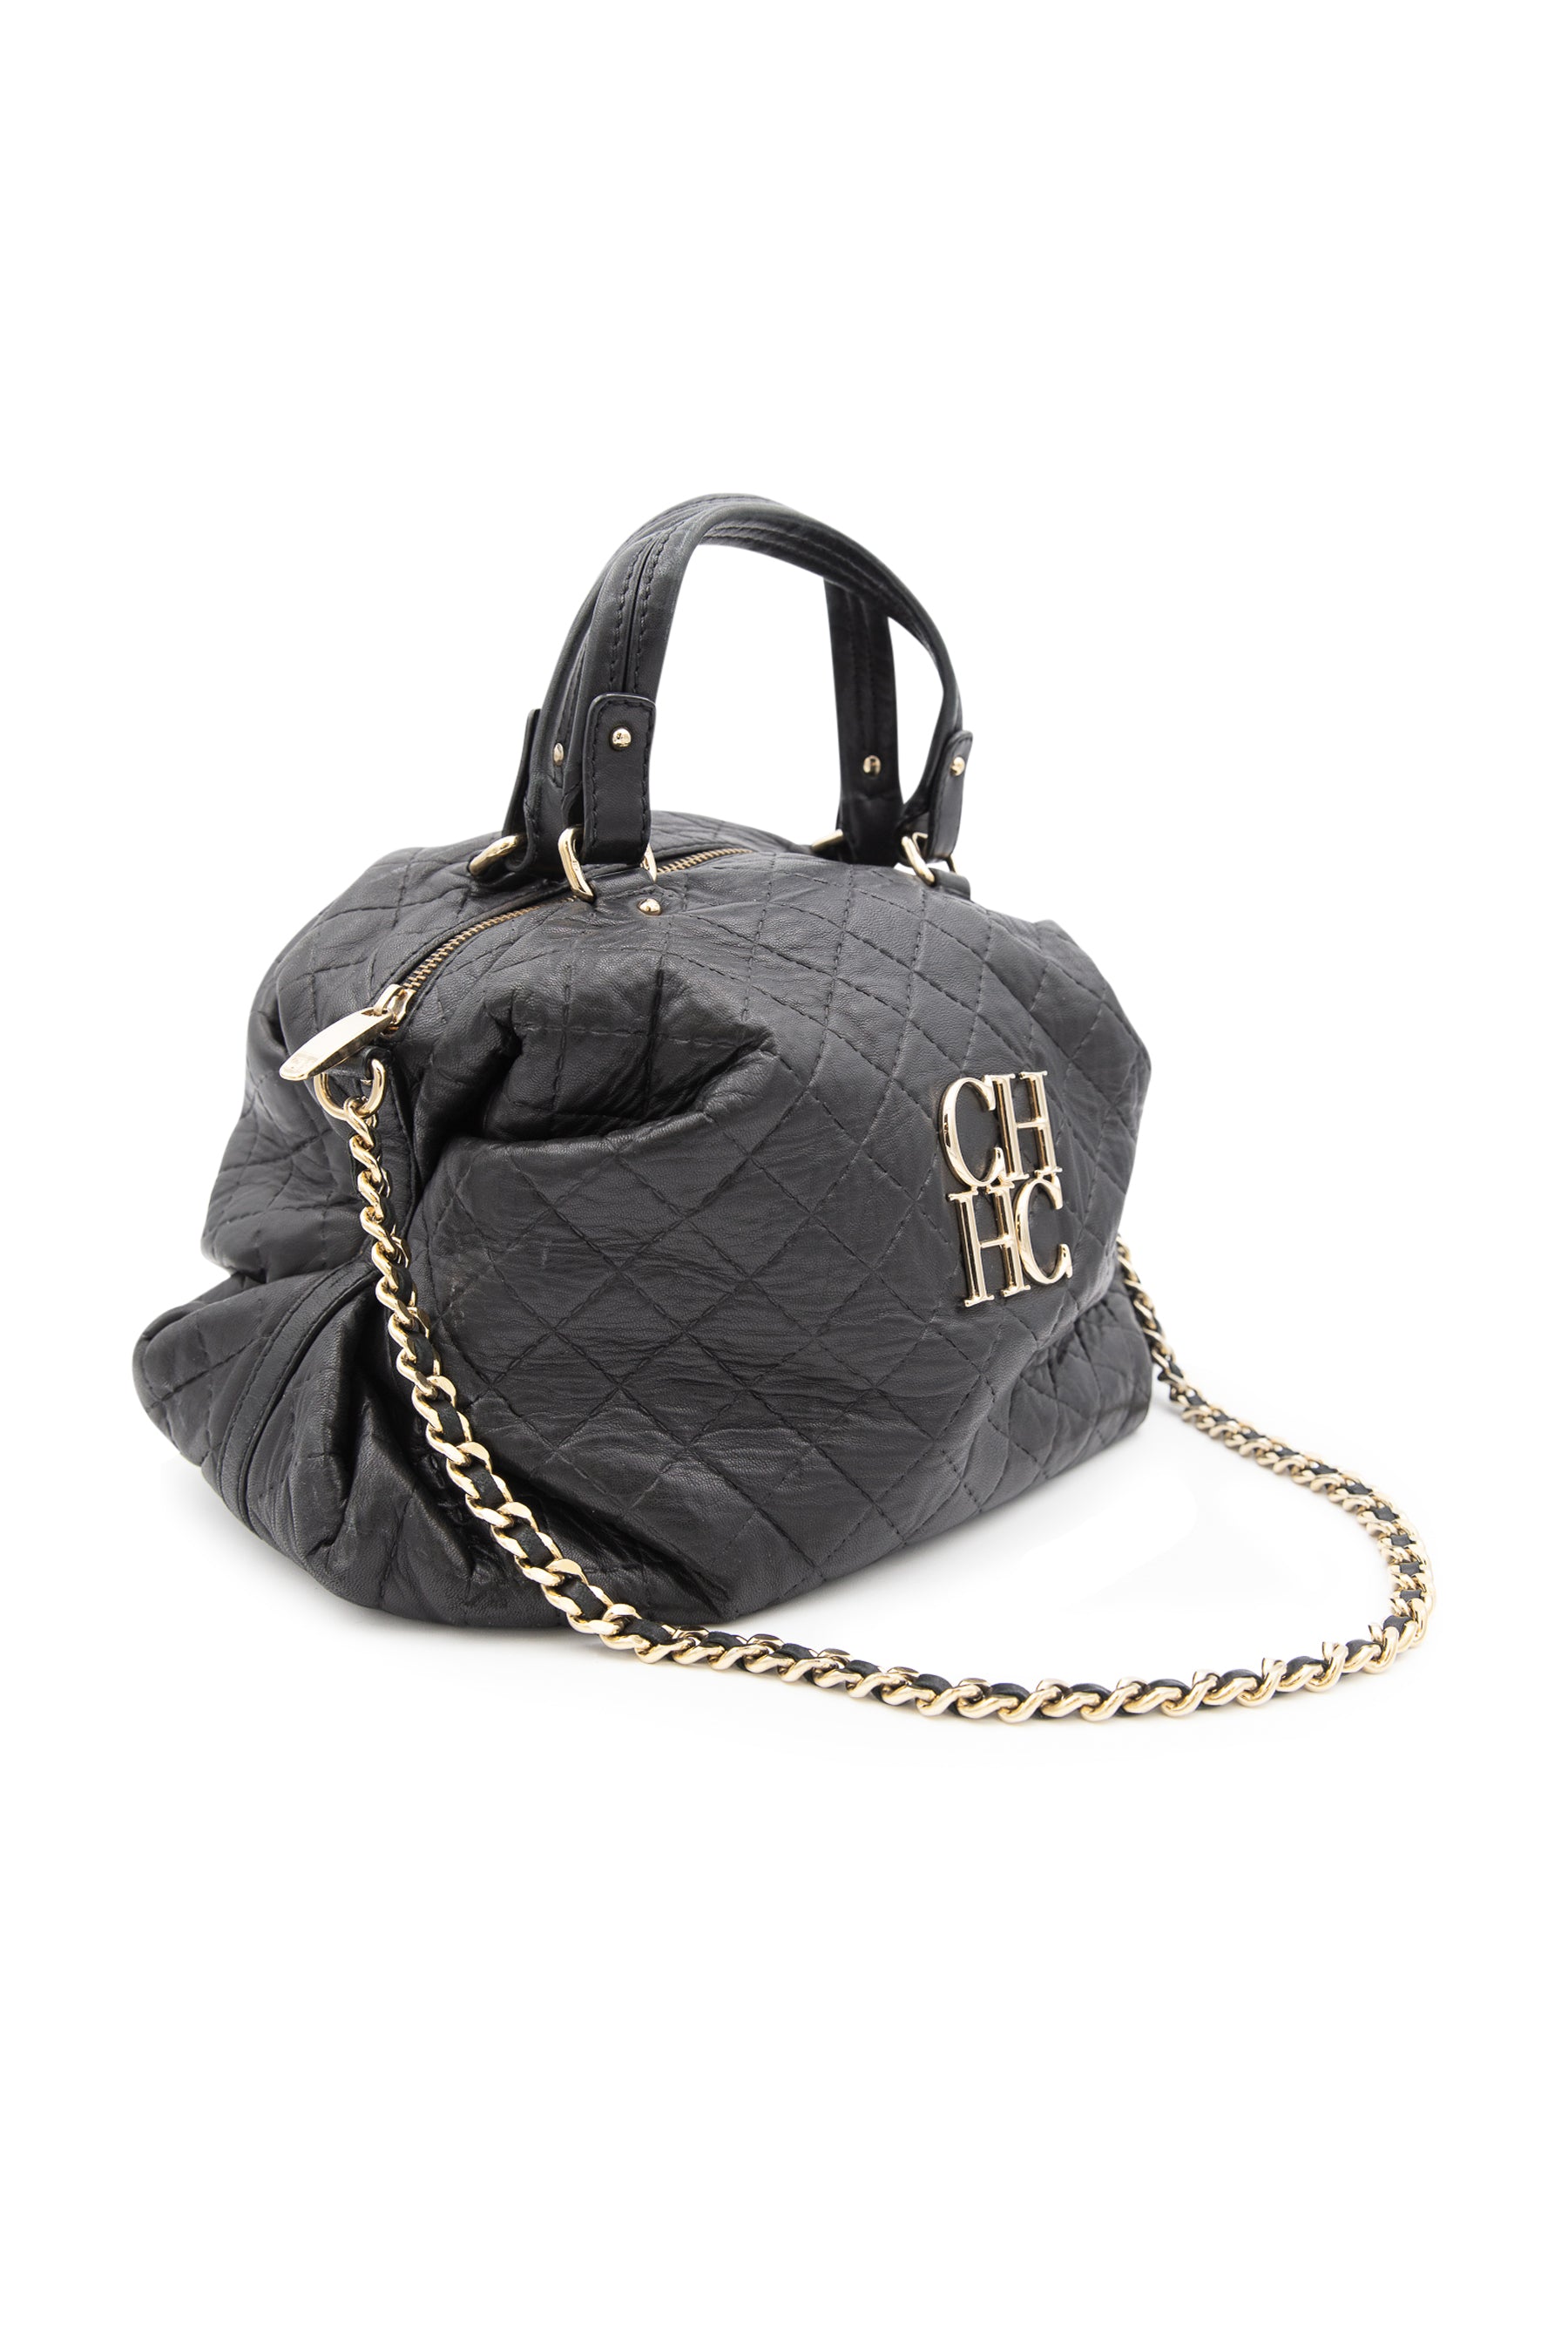 CAROLINA HERRERA 'JEWEL' Black QUILTED LEATHER Chain Clutch Bag  CH HandBag NWT